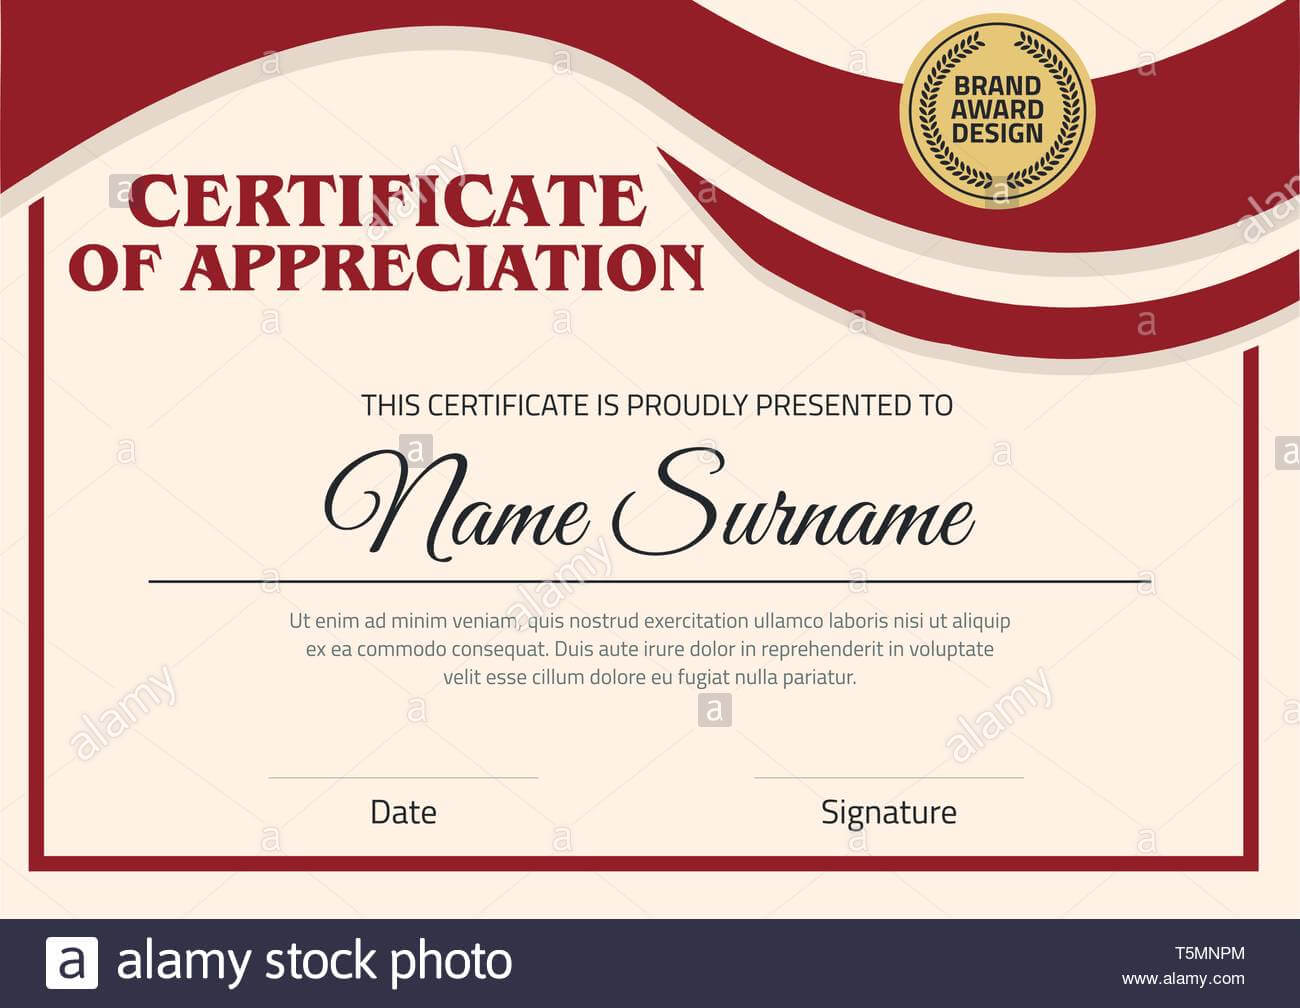 Vector Certificate Template. Illustration Certificate In A4 Throughout Certificate Template Size